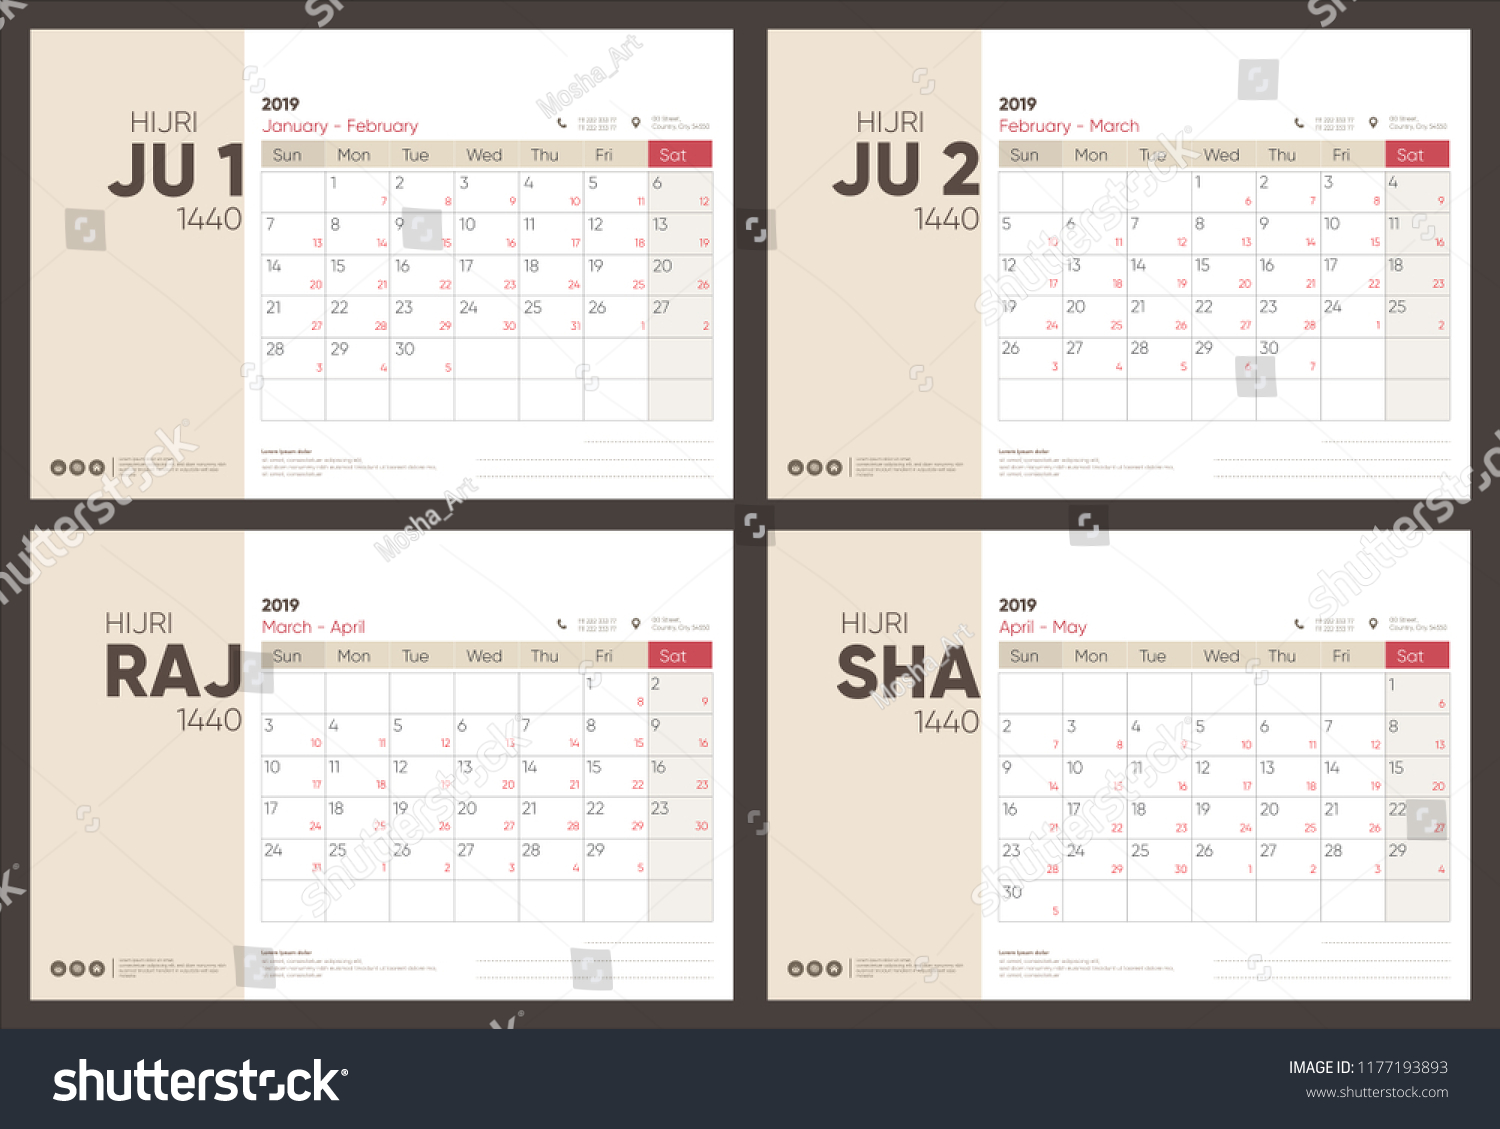 Hijri Gregorian Calendar Planner Design 14402019 Stock Vector Royalty Free 1177193893